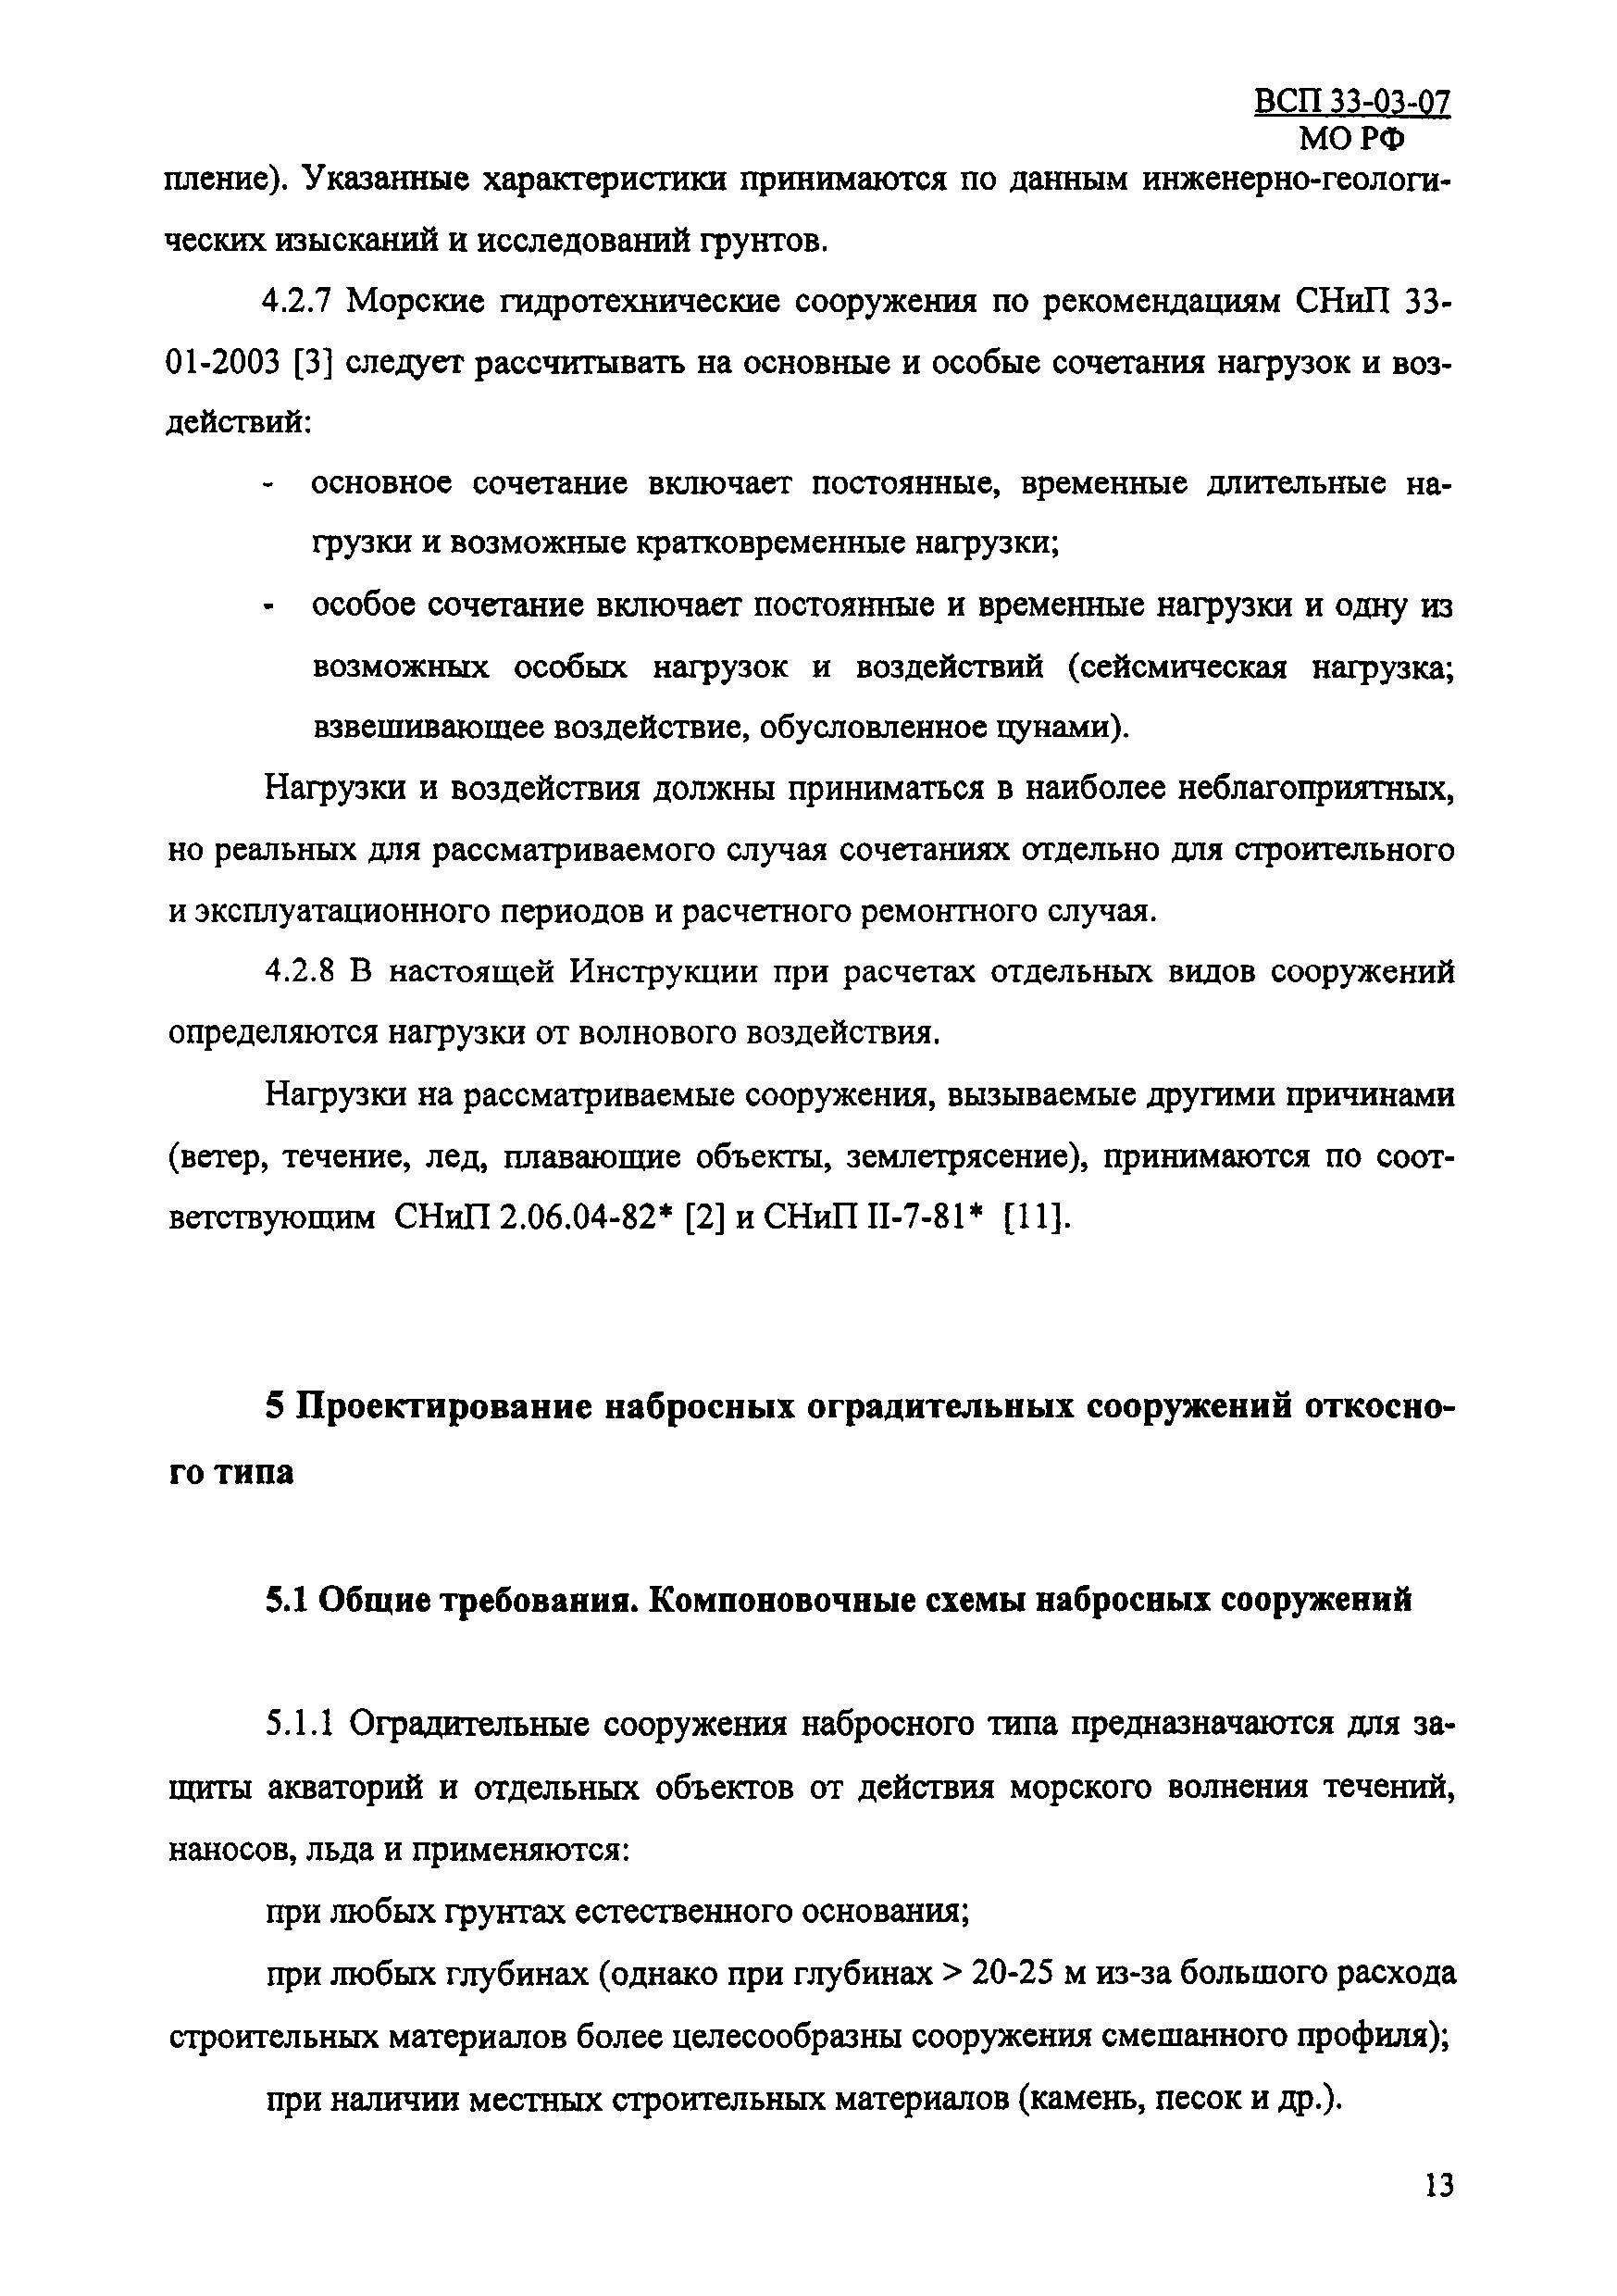 ВСП 33-03-07 МО РФ